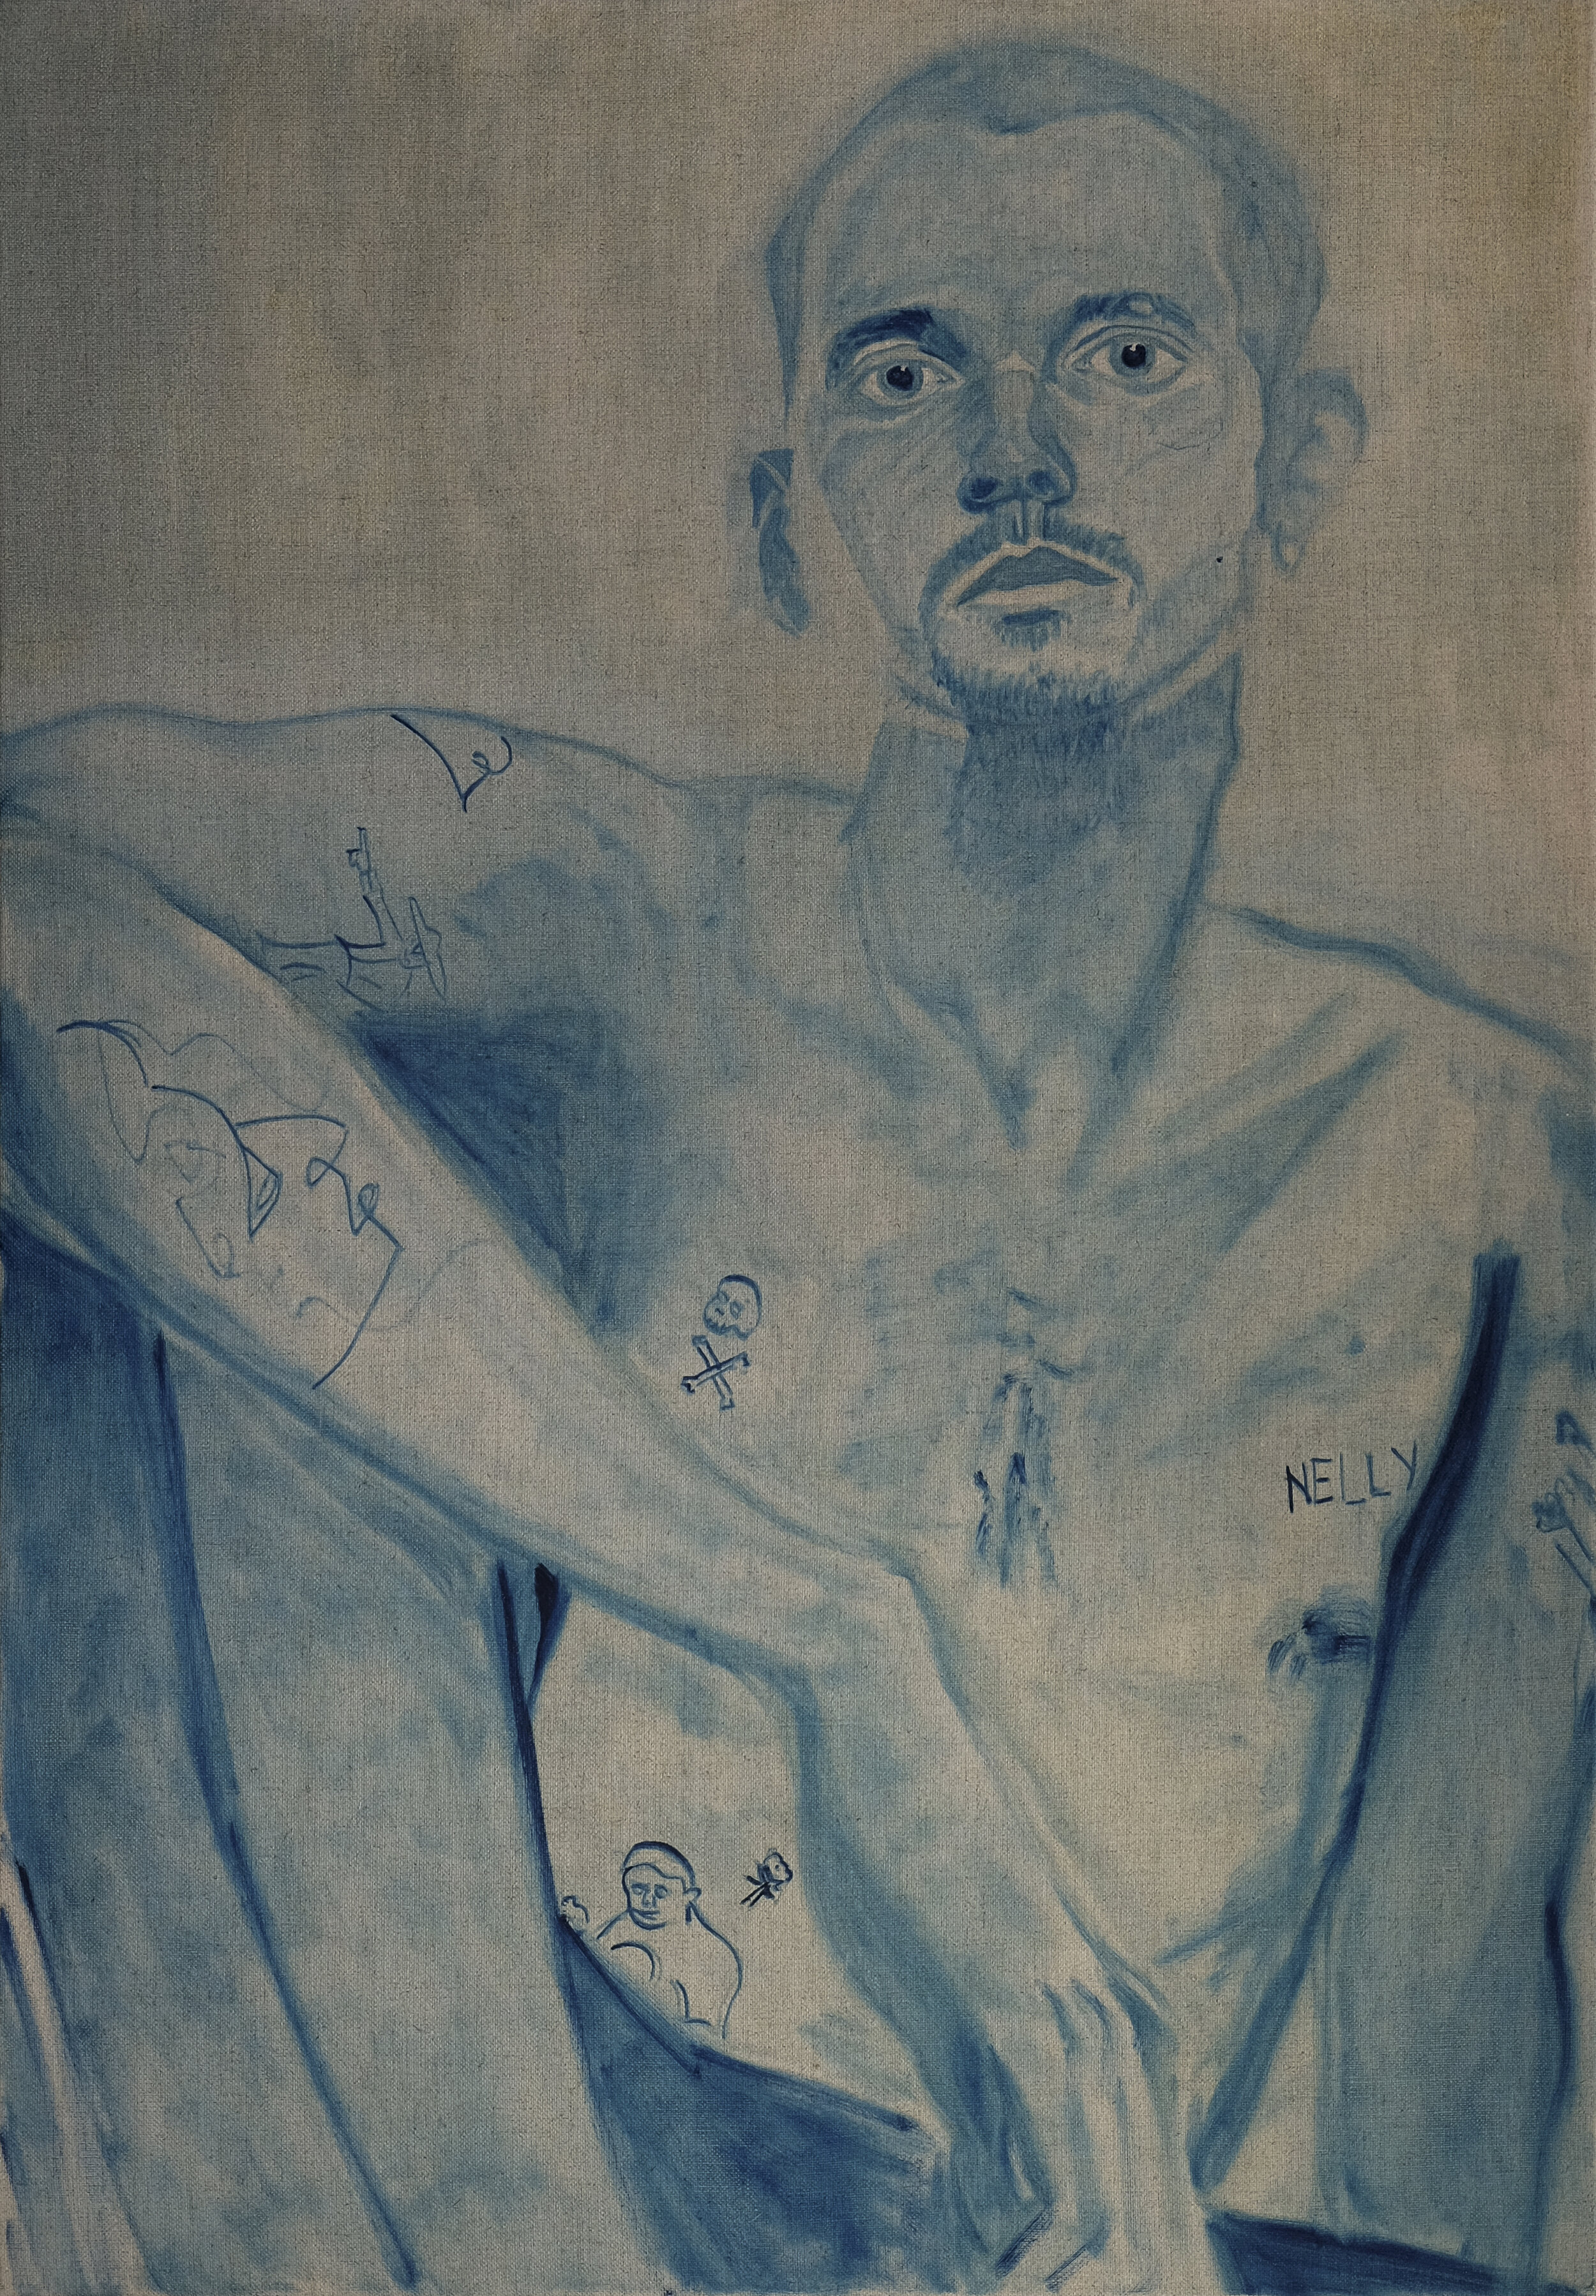   Self Portrait with Tattoos   2020  Oil on linen  70cm x 100cm 